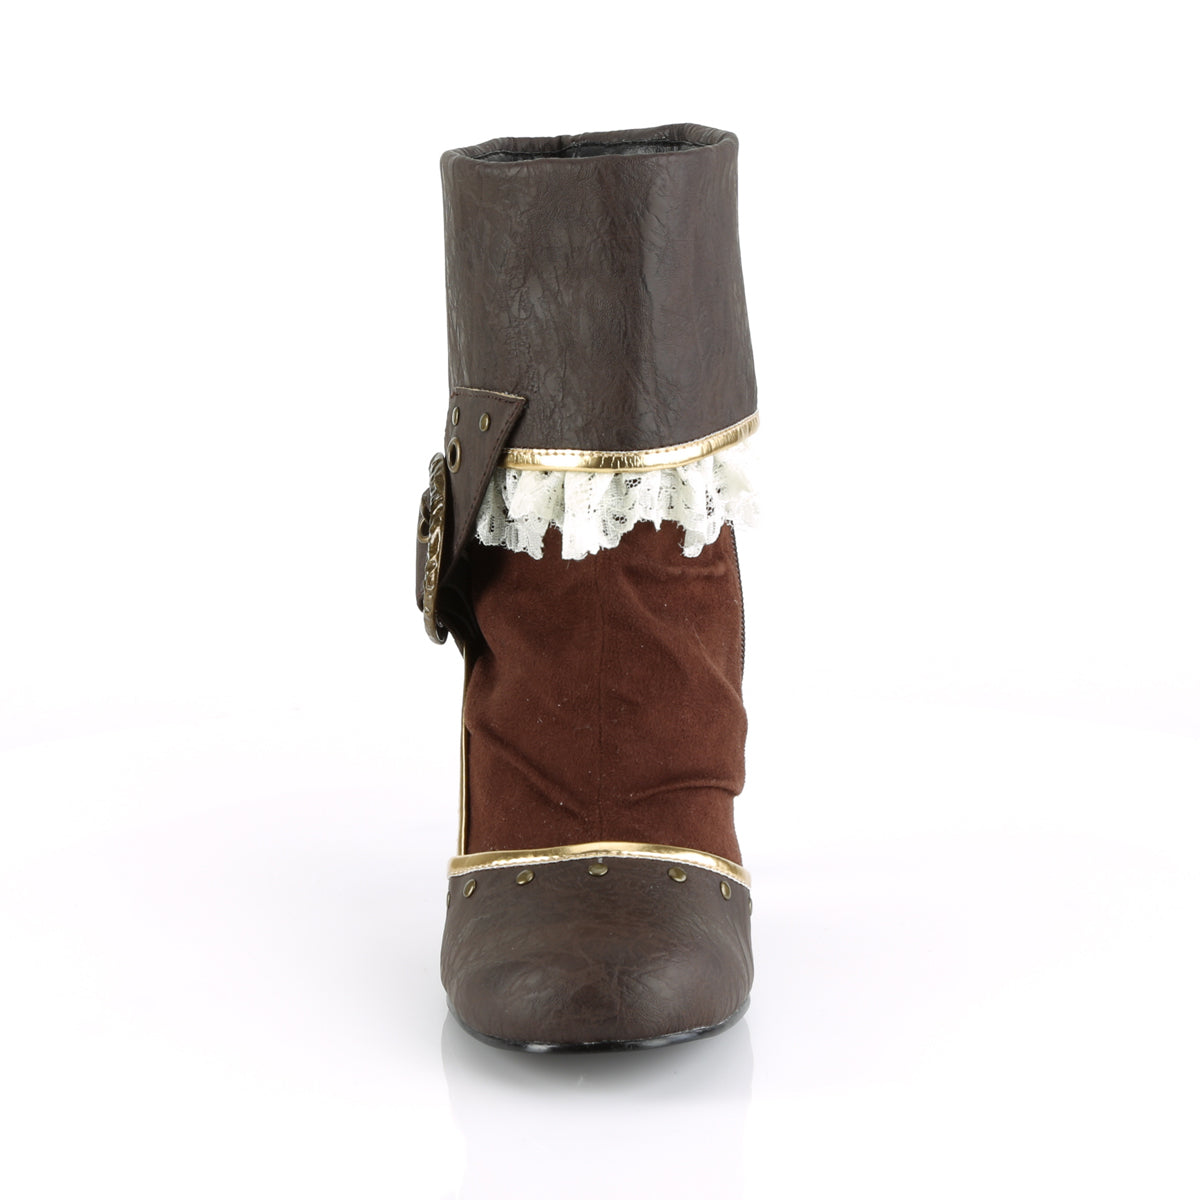 MATEY-115 3" Heel Brown Distressed Pu Women's Boots Funtasma Costume Shoes Alternative Footwear